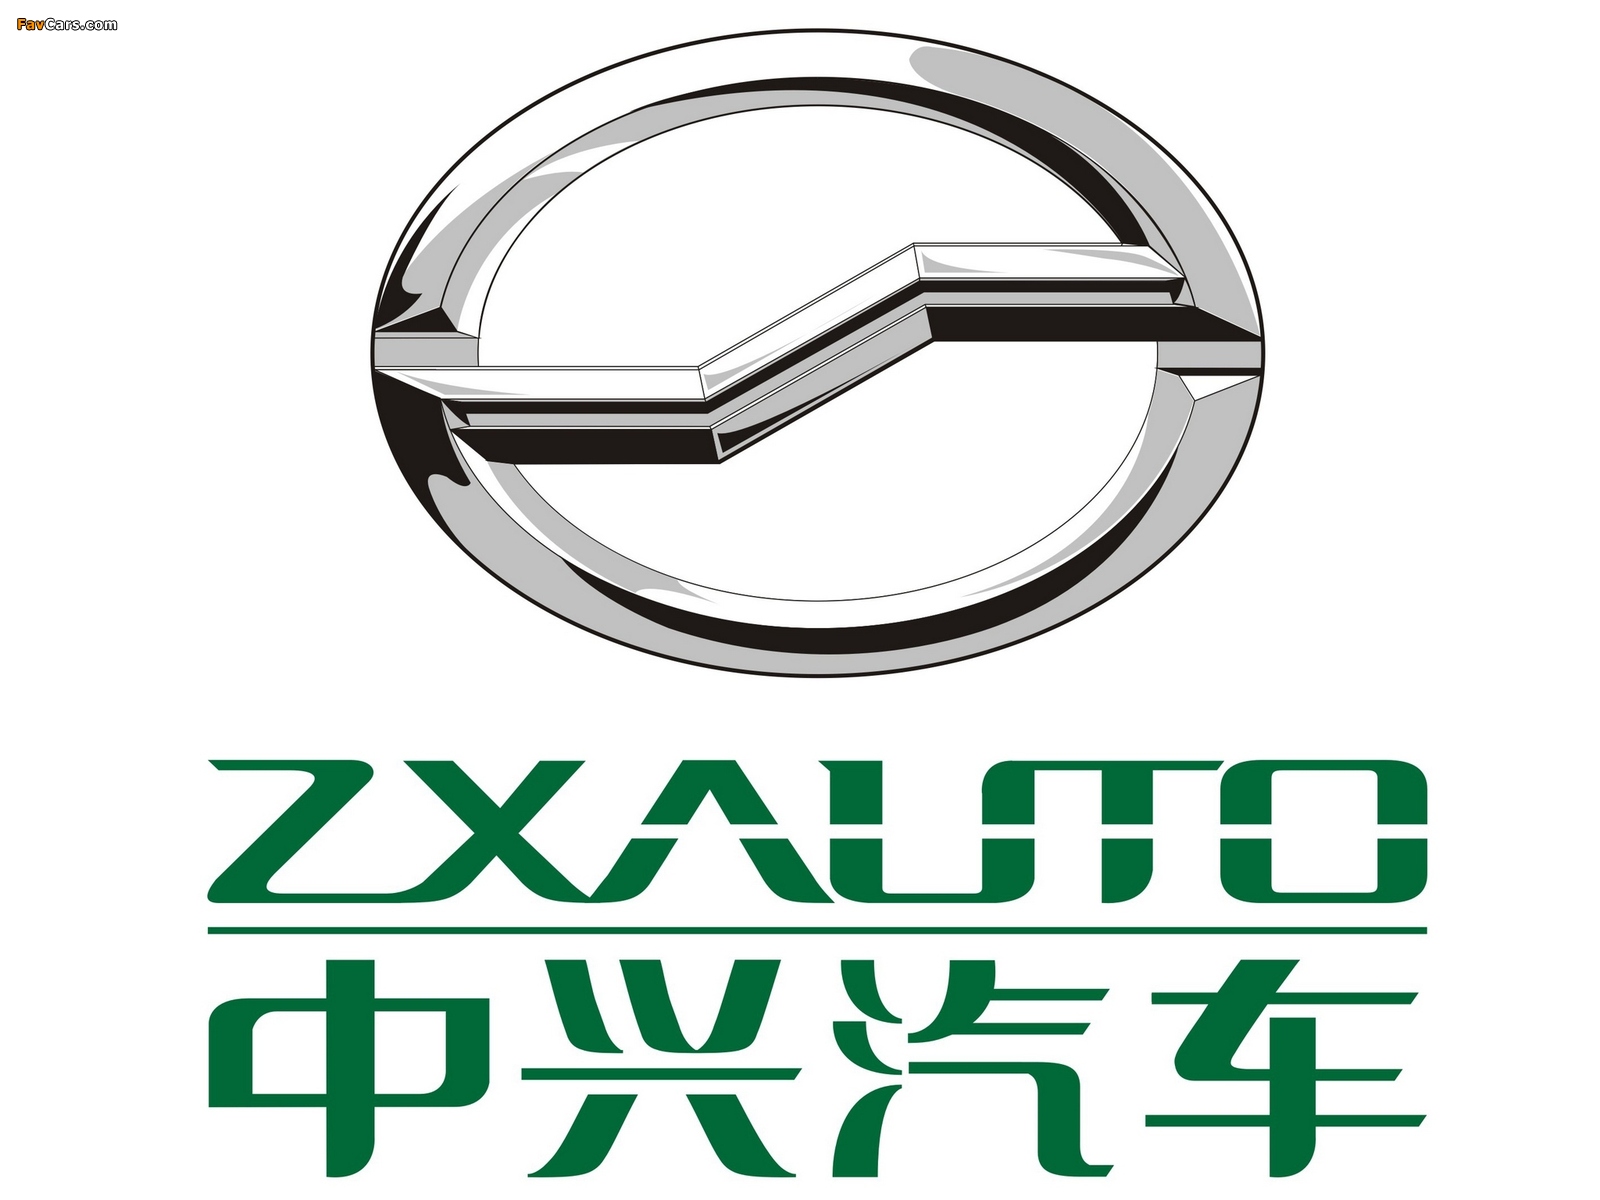 ZXAuto images (1600 x 1200)